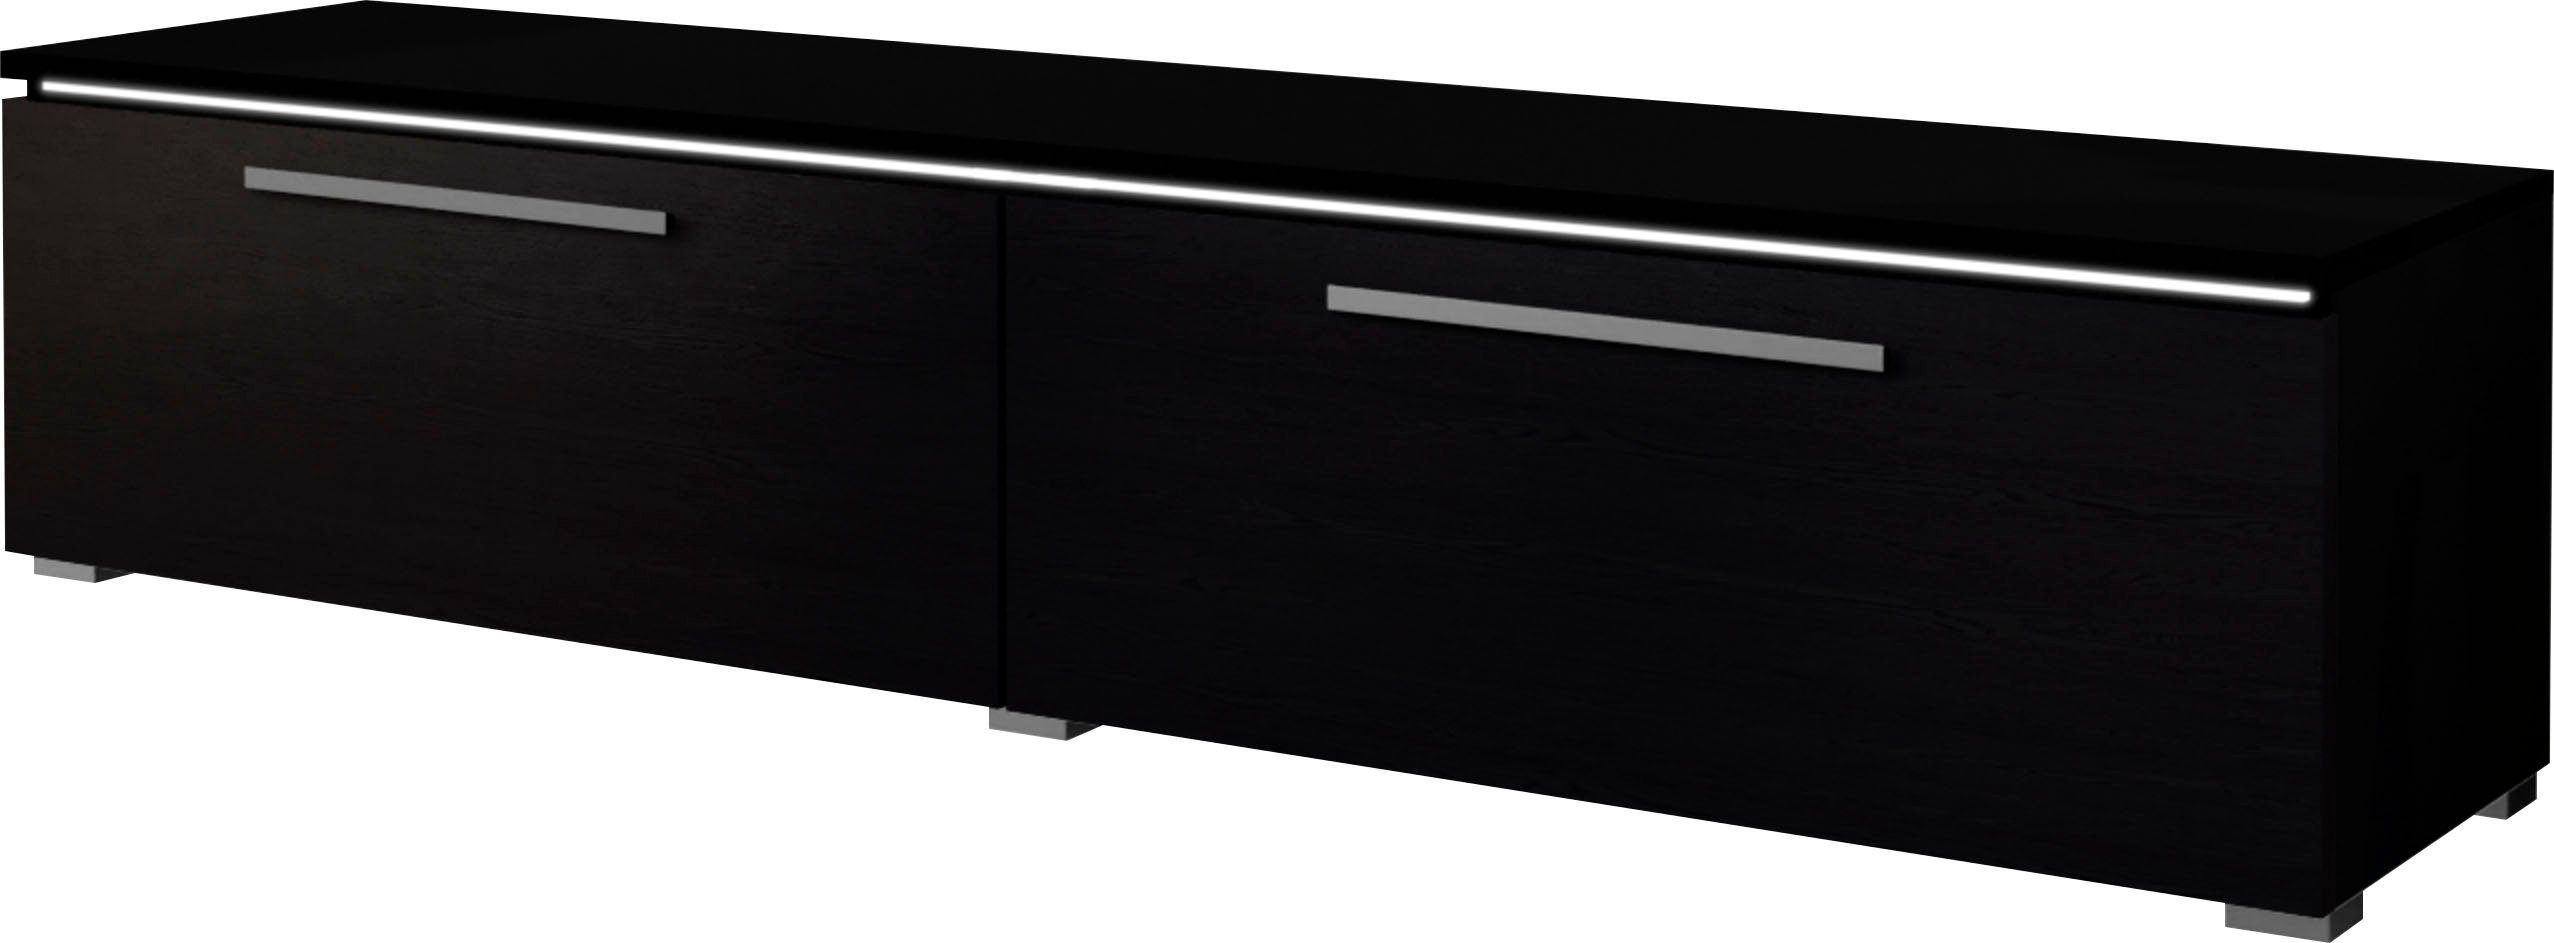 Helvetia Meble Tv-meubel Amber Breedte 160 cm